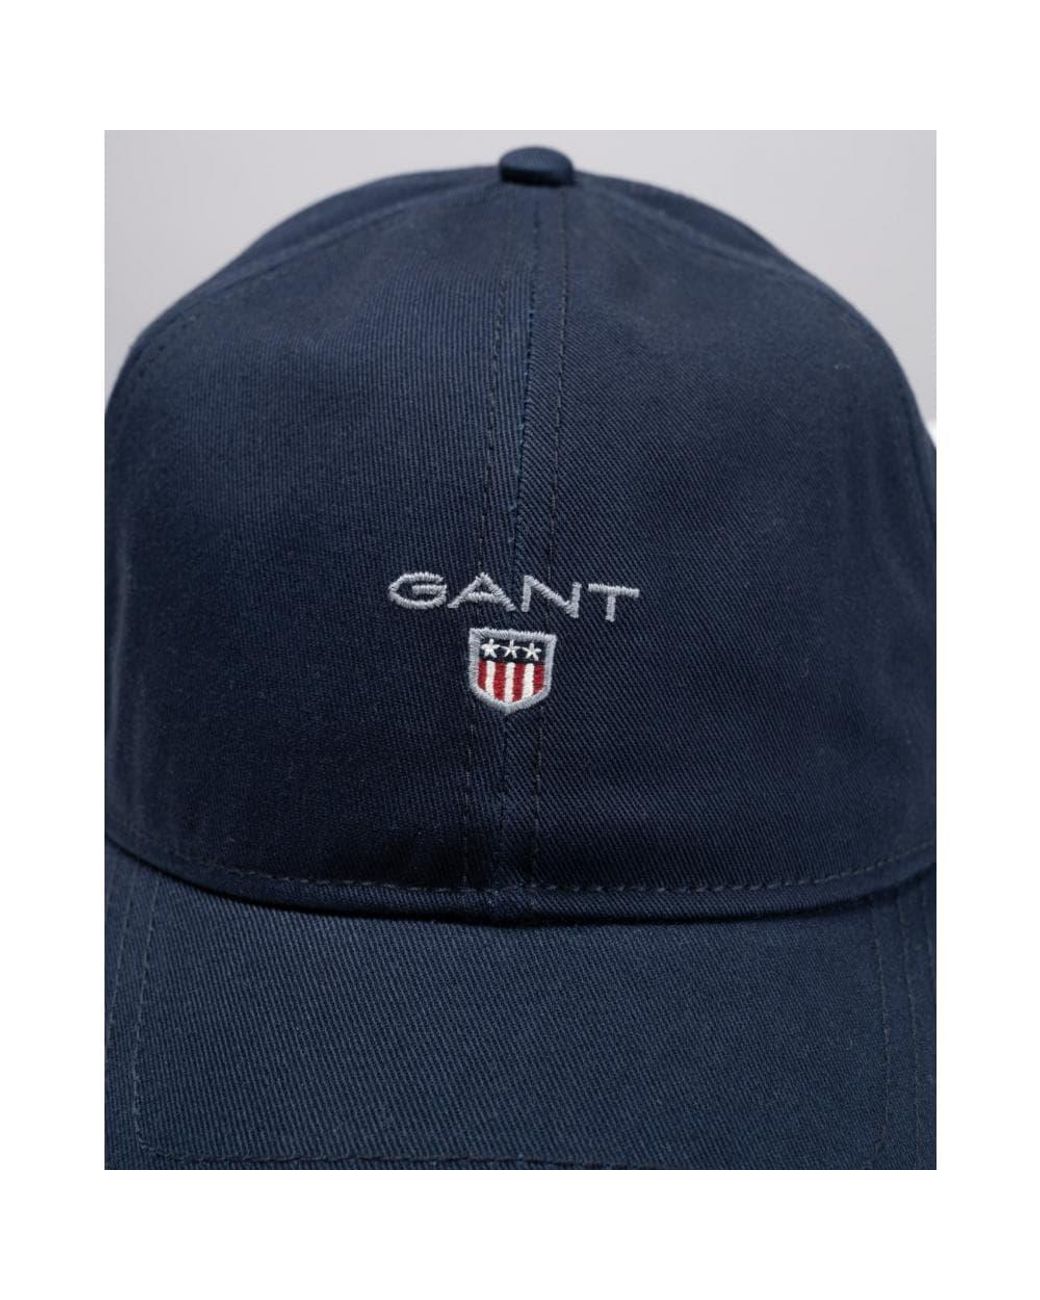 Blue GANT Men's Cotton Twill Baseball Cap